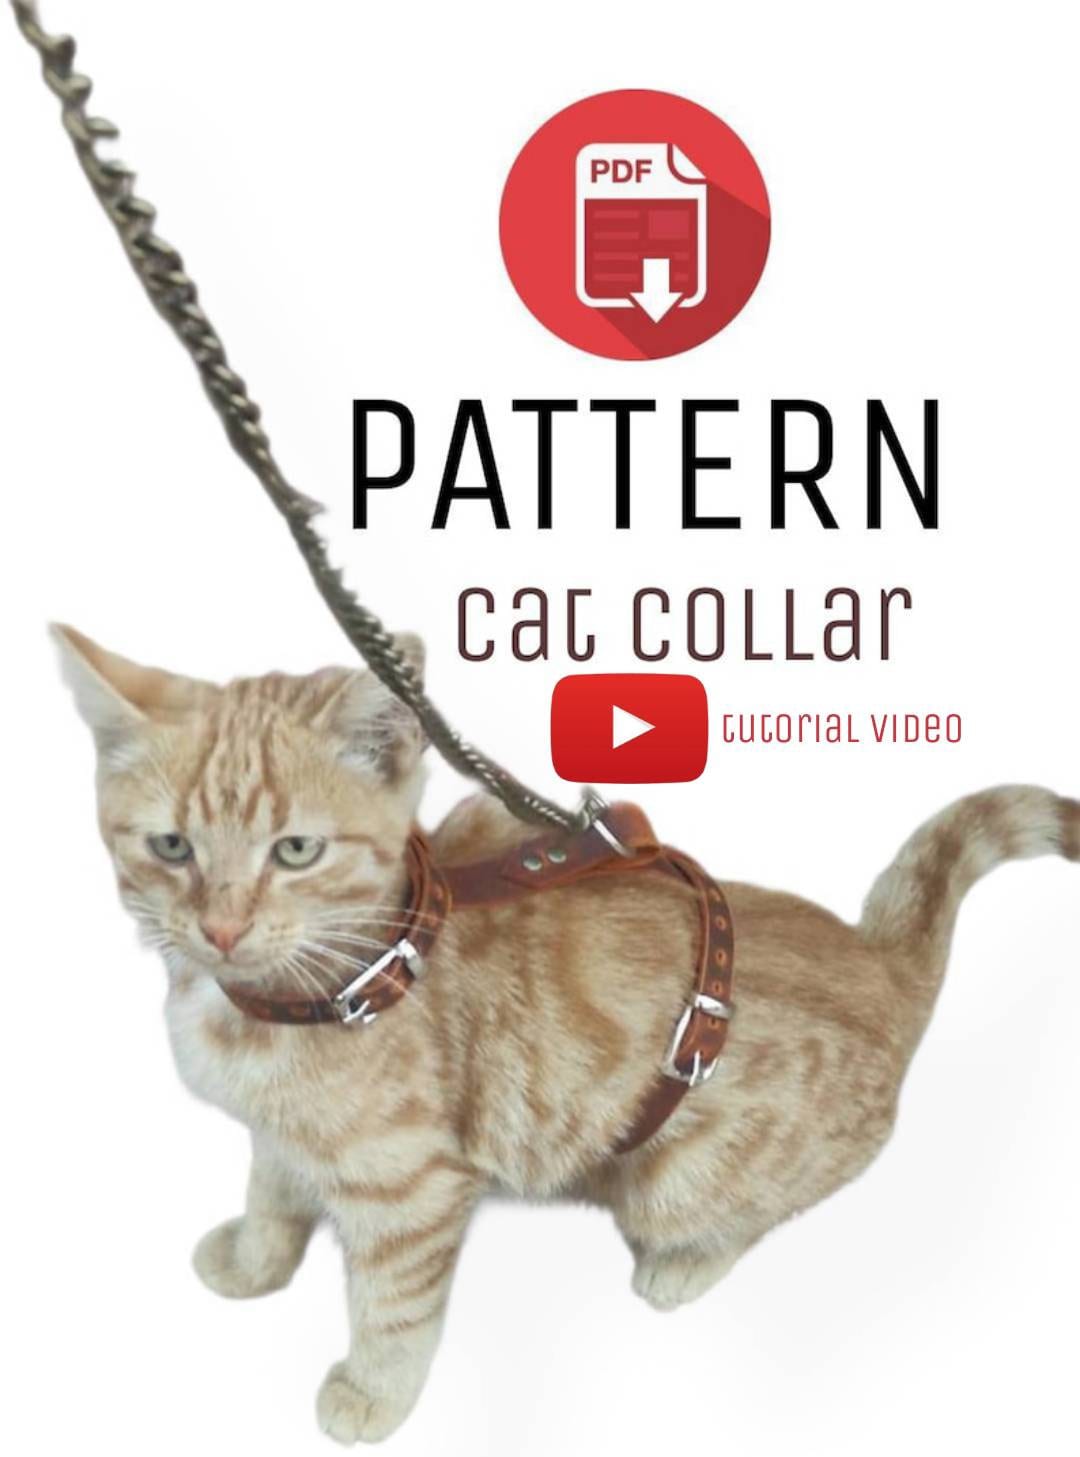 Dog Harness Pattern - Leather Harness DIY - Pdf Download – Tri Atelier  Design Studio